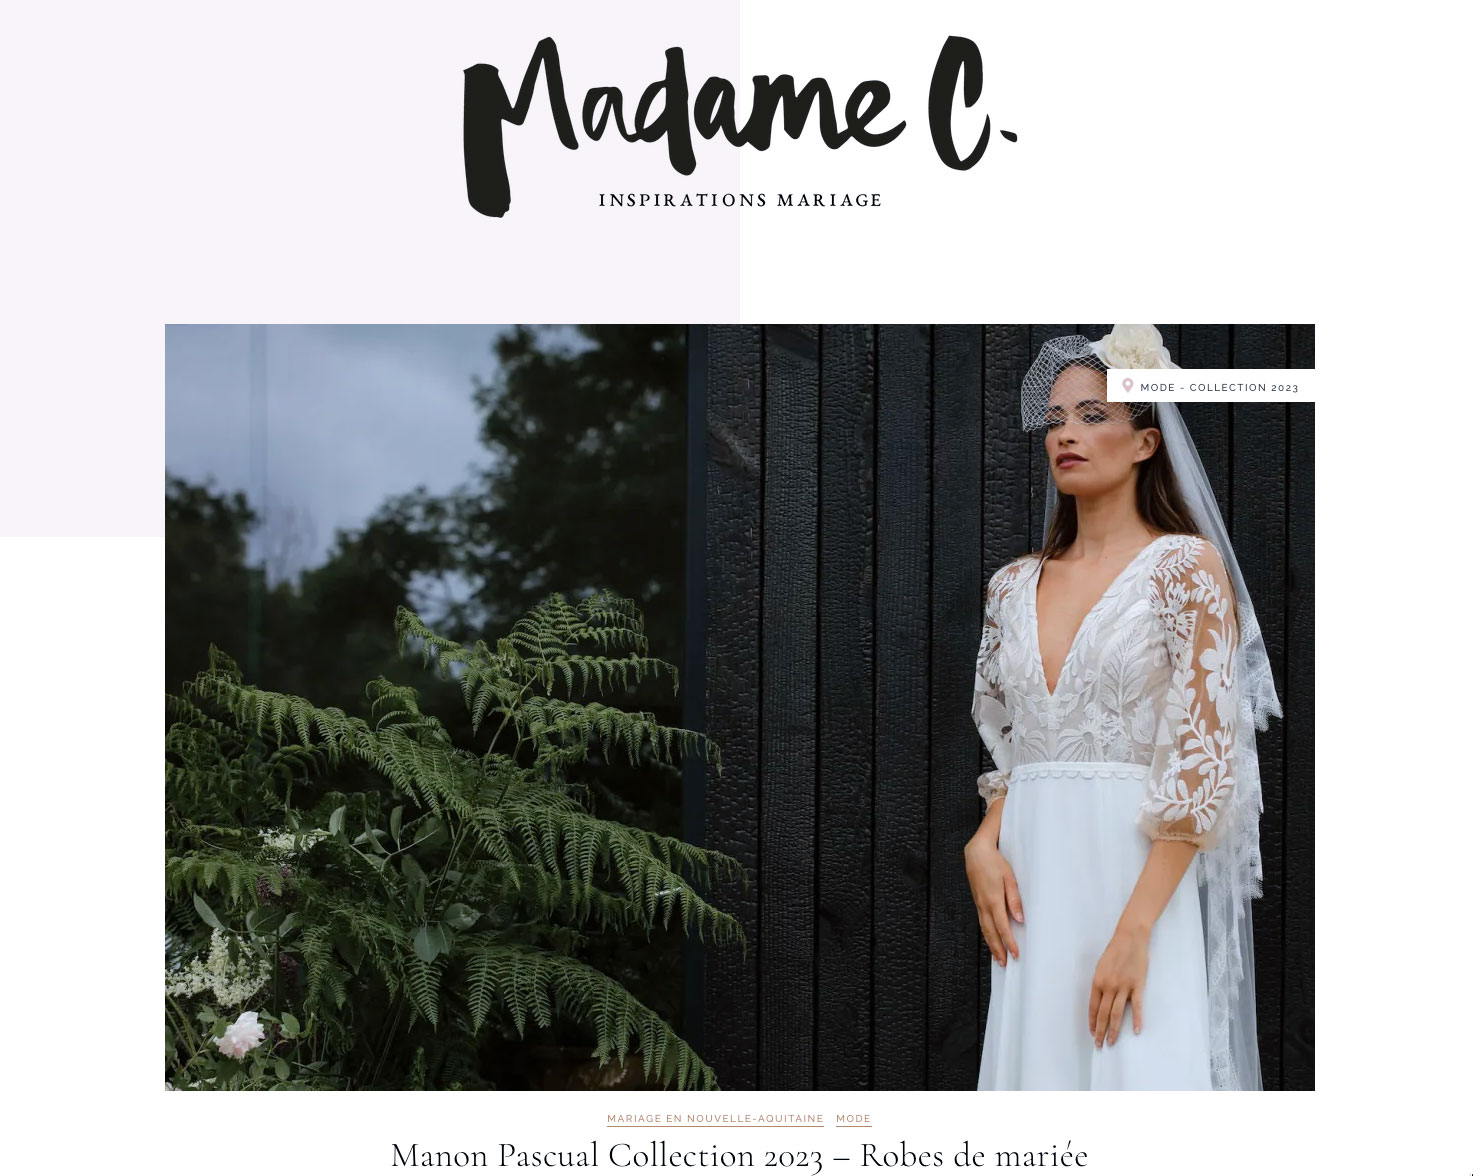 Madame C, inspirations Mariage, Manon Pascual Collection 2023 - Robes de mariée